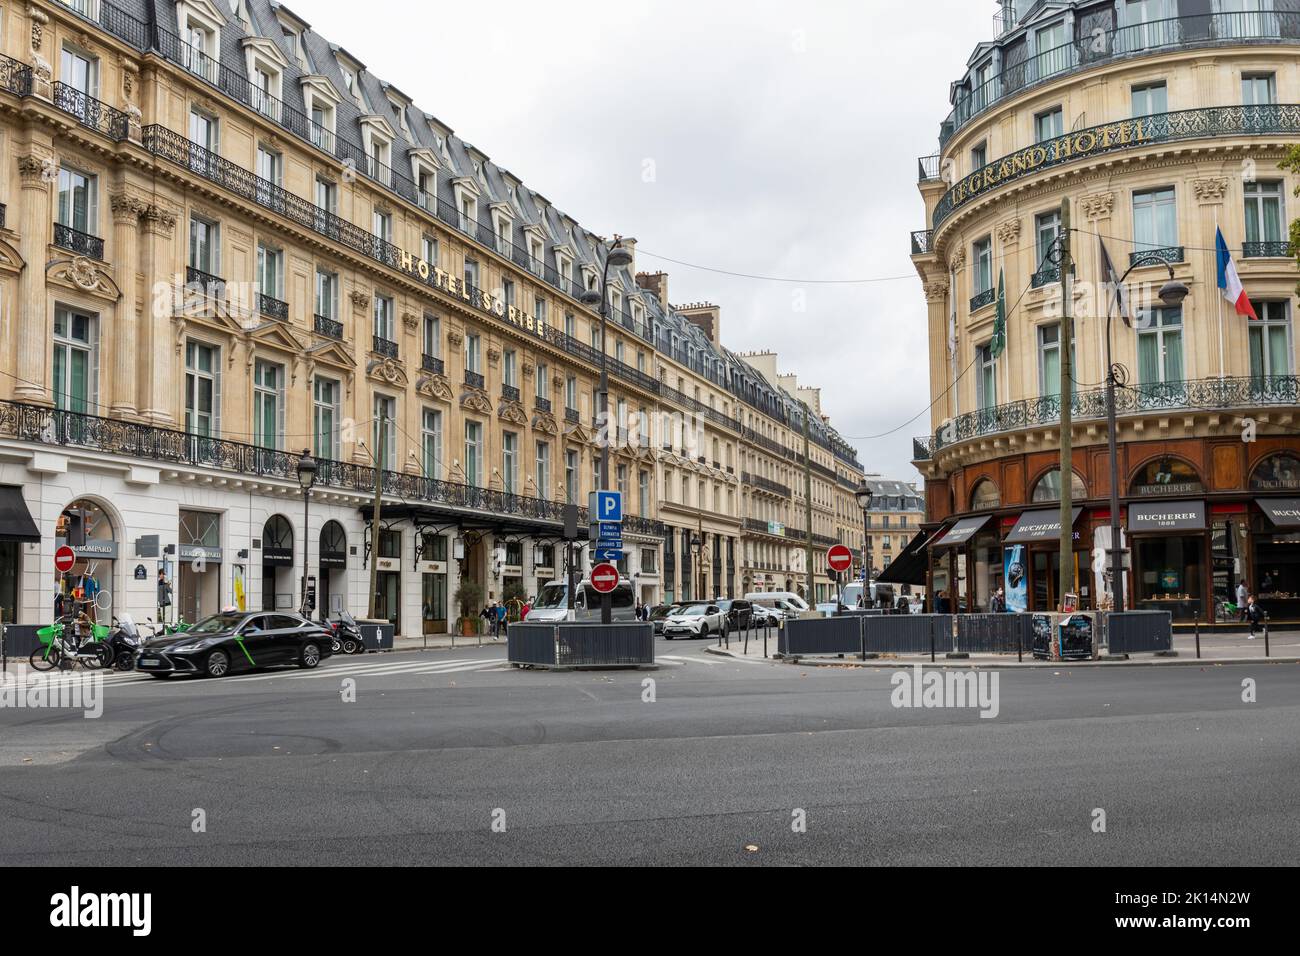 Sofitel Le Scribe Paris Opera a 5 star luxury hotel and Bucherer store,  9th arrondissement, Paris, France Stock Photo